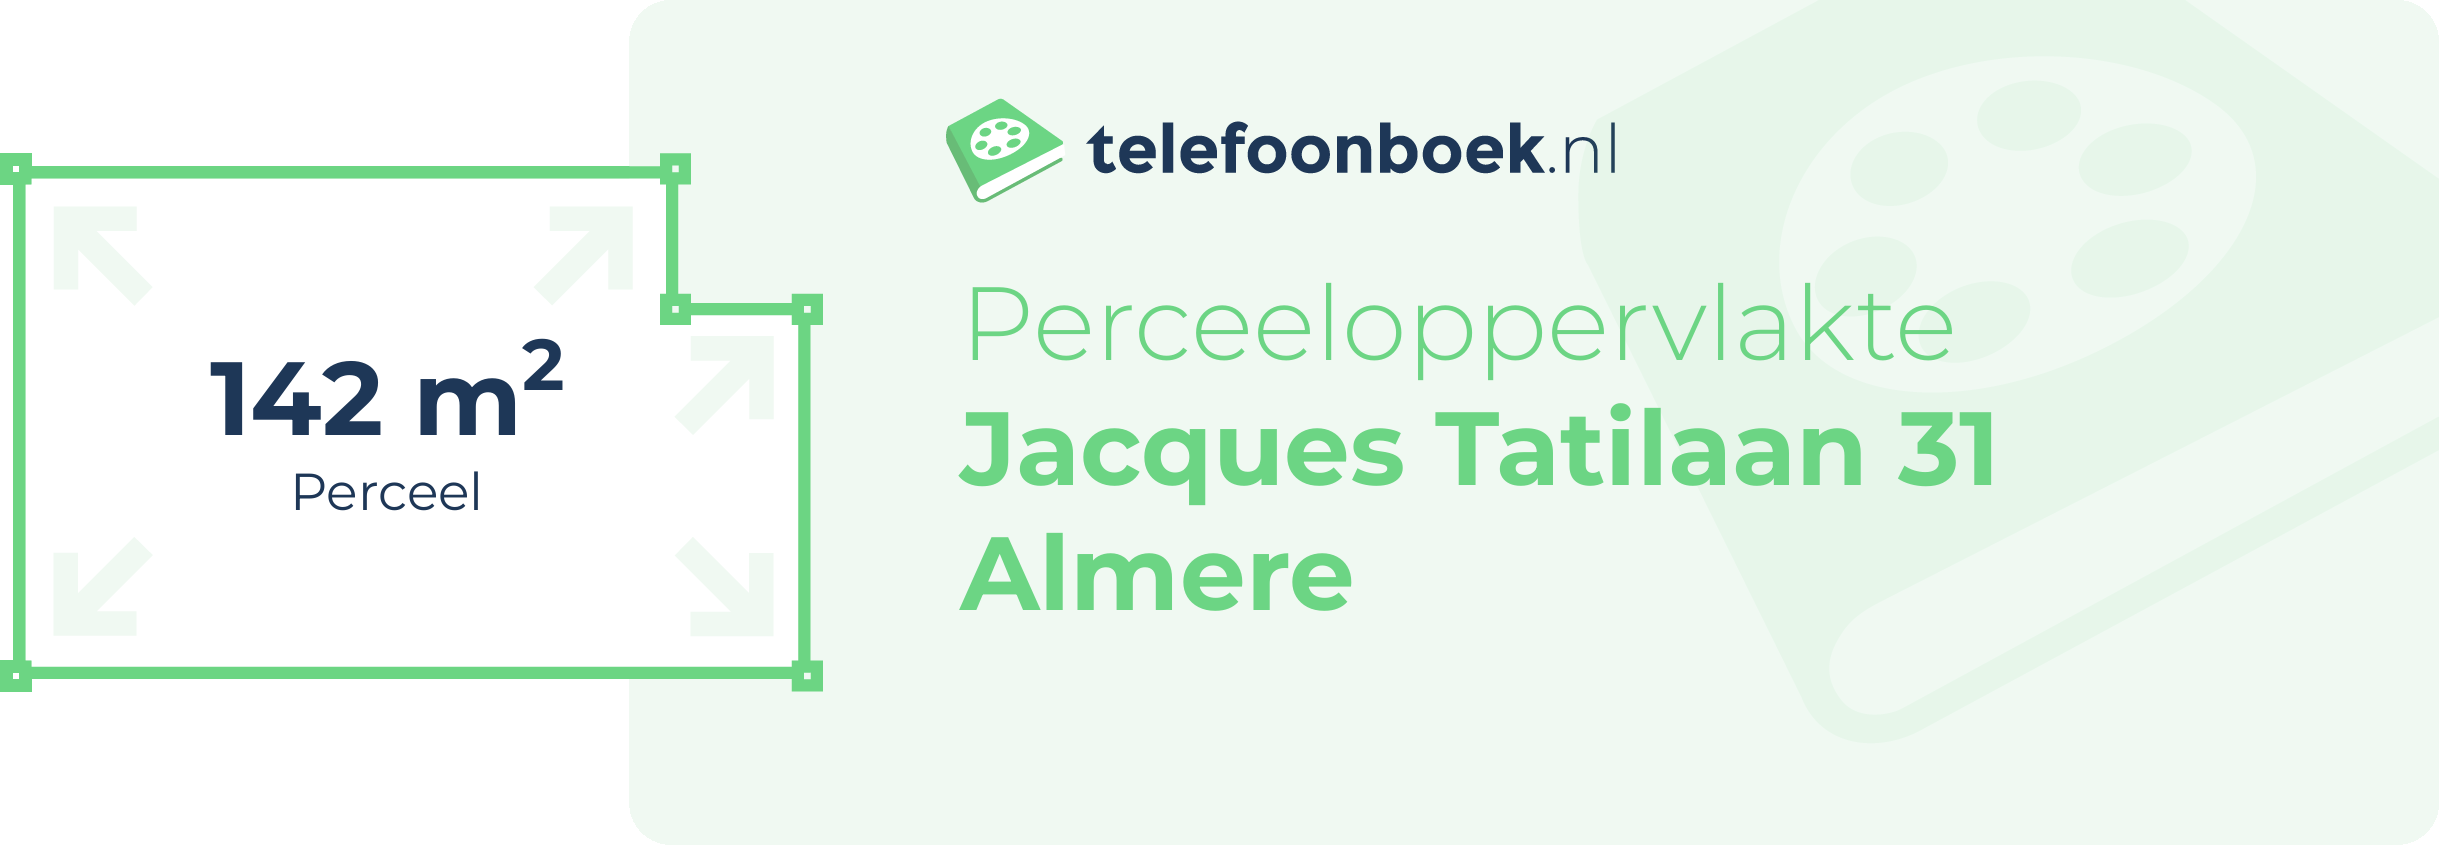 Perceeloppervlakte Jacques Tatilaan 31 Almere